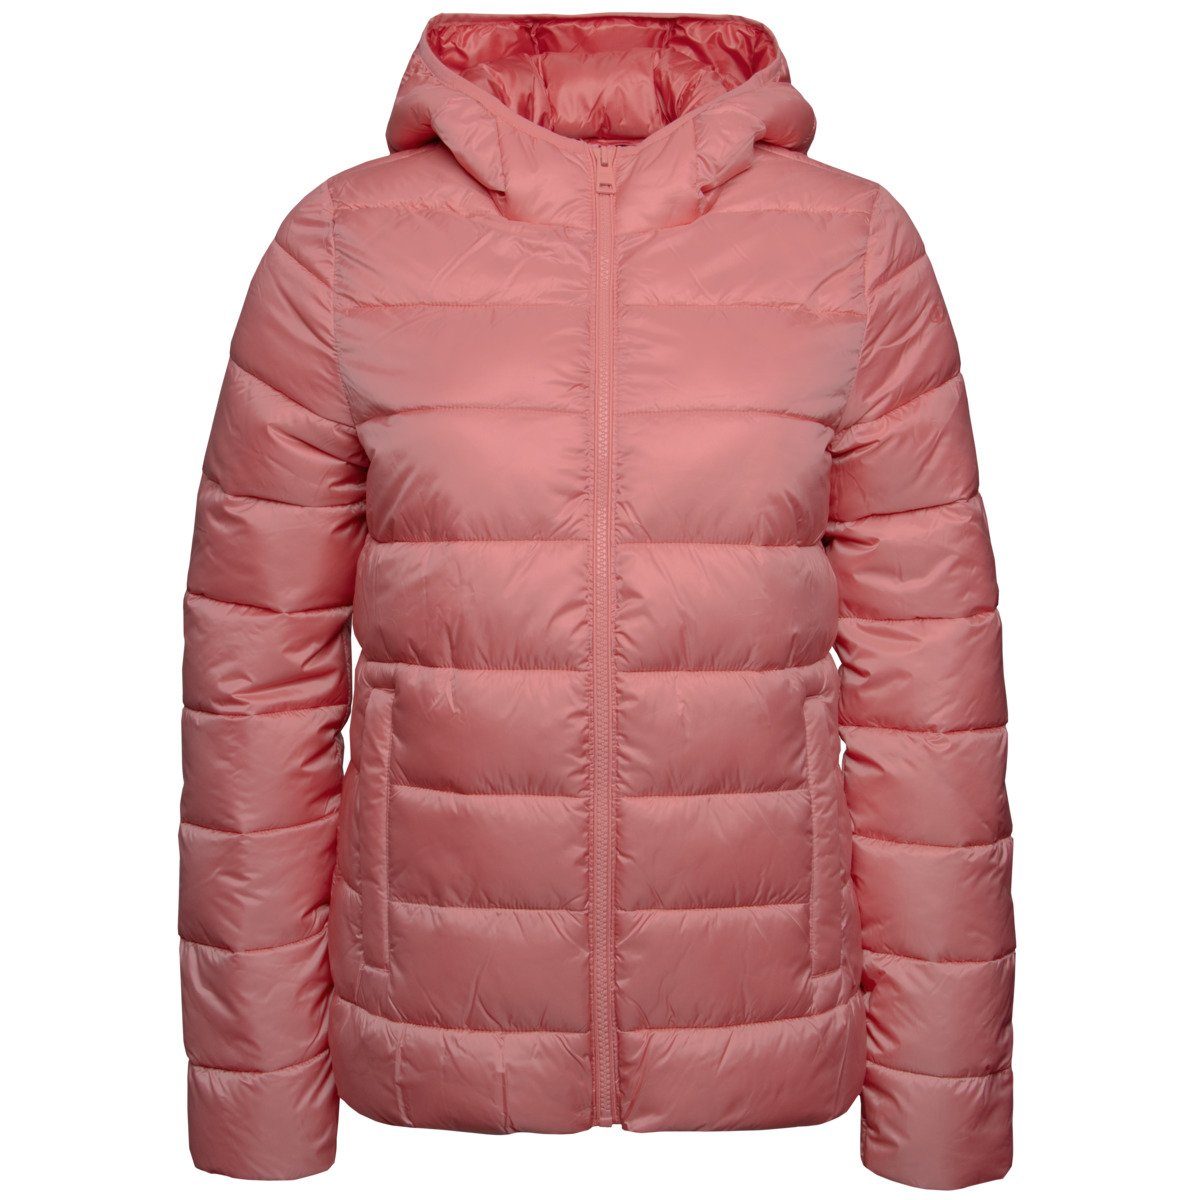 Champion Winterjacke Hooded Polyfilled Damen pink | Jacken